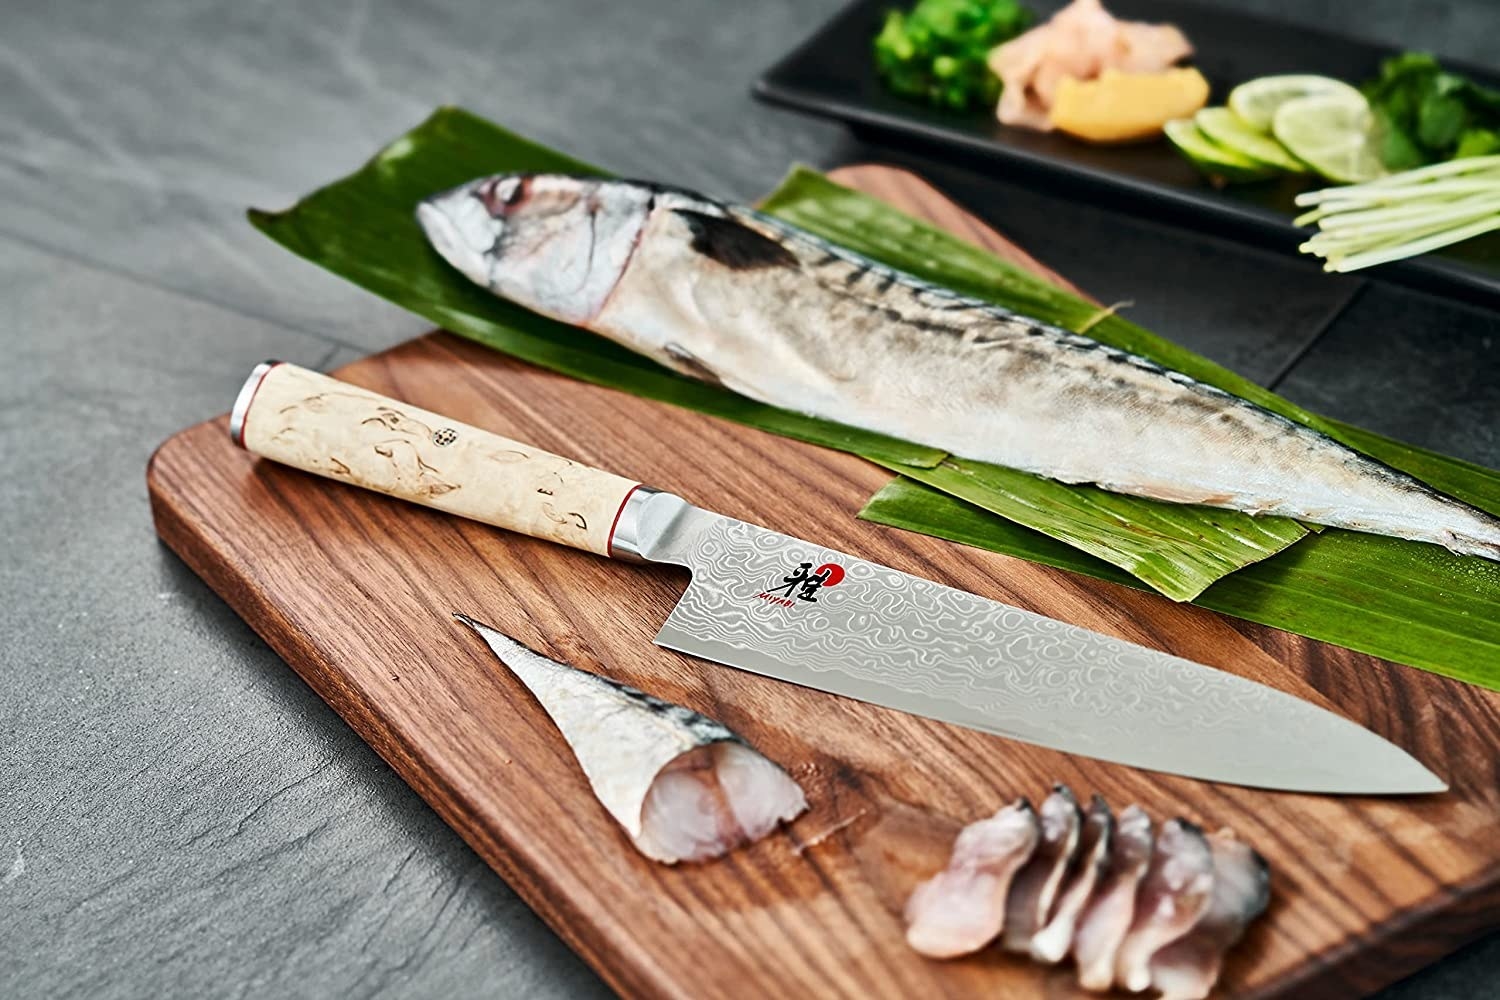 The Miyabi knife on a cutting board next to fish